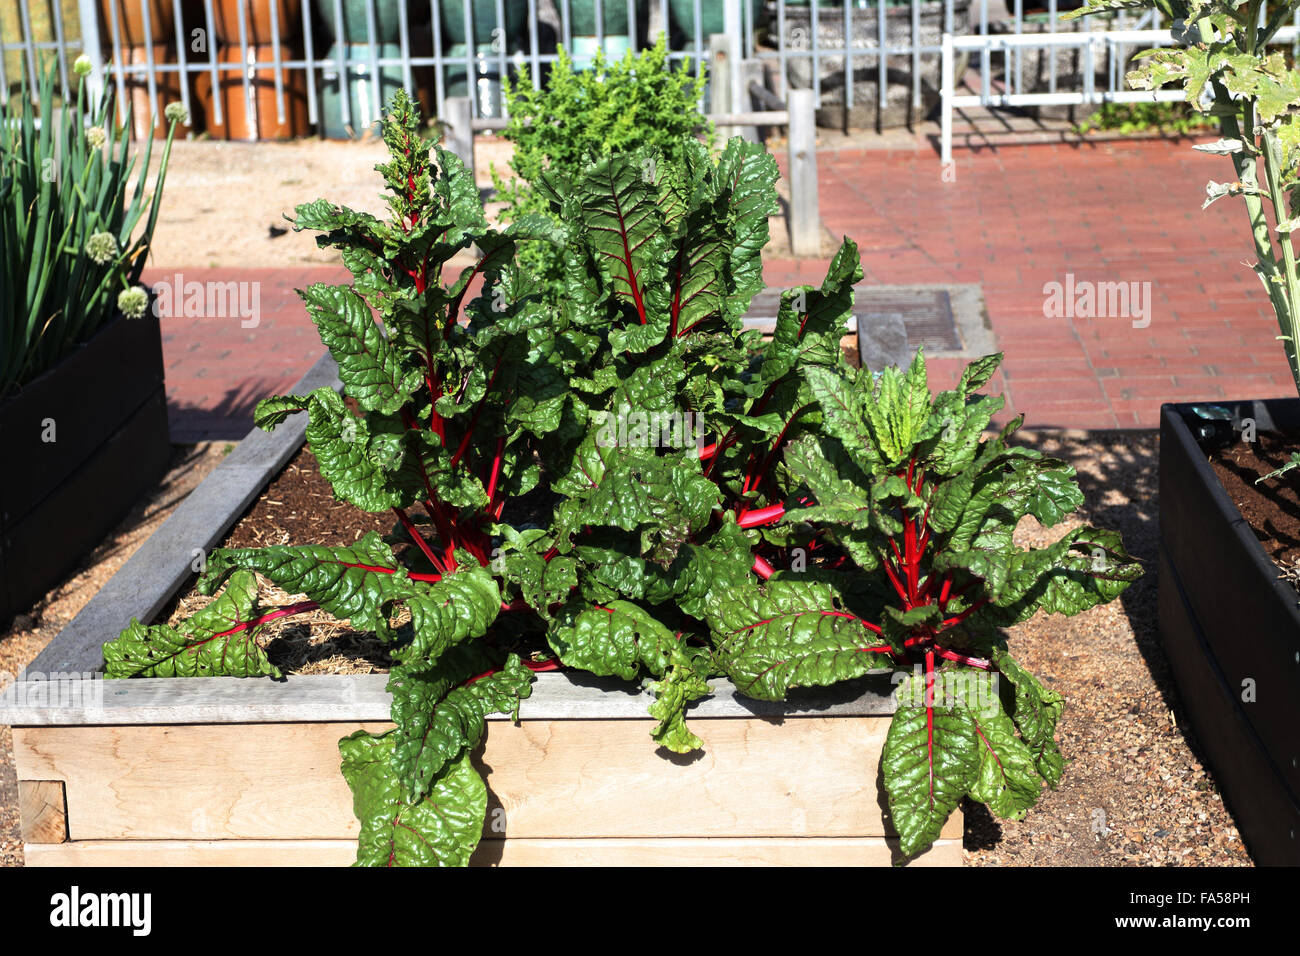 Rheum rhabarbarum or also known as Rhubarb growing on raised garden bed Stock Photo